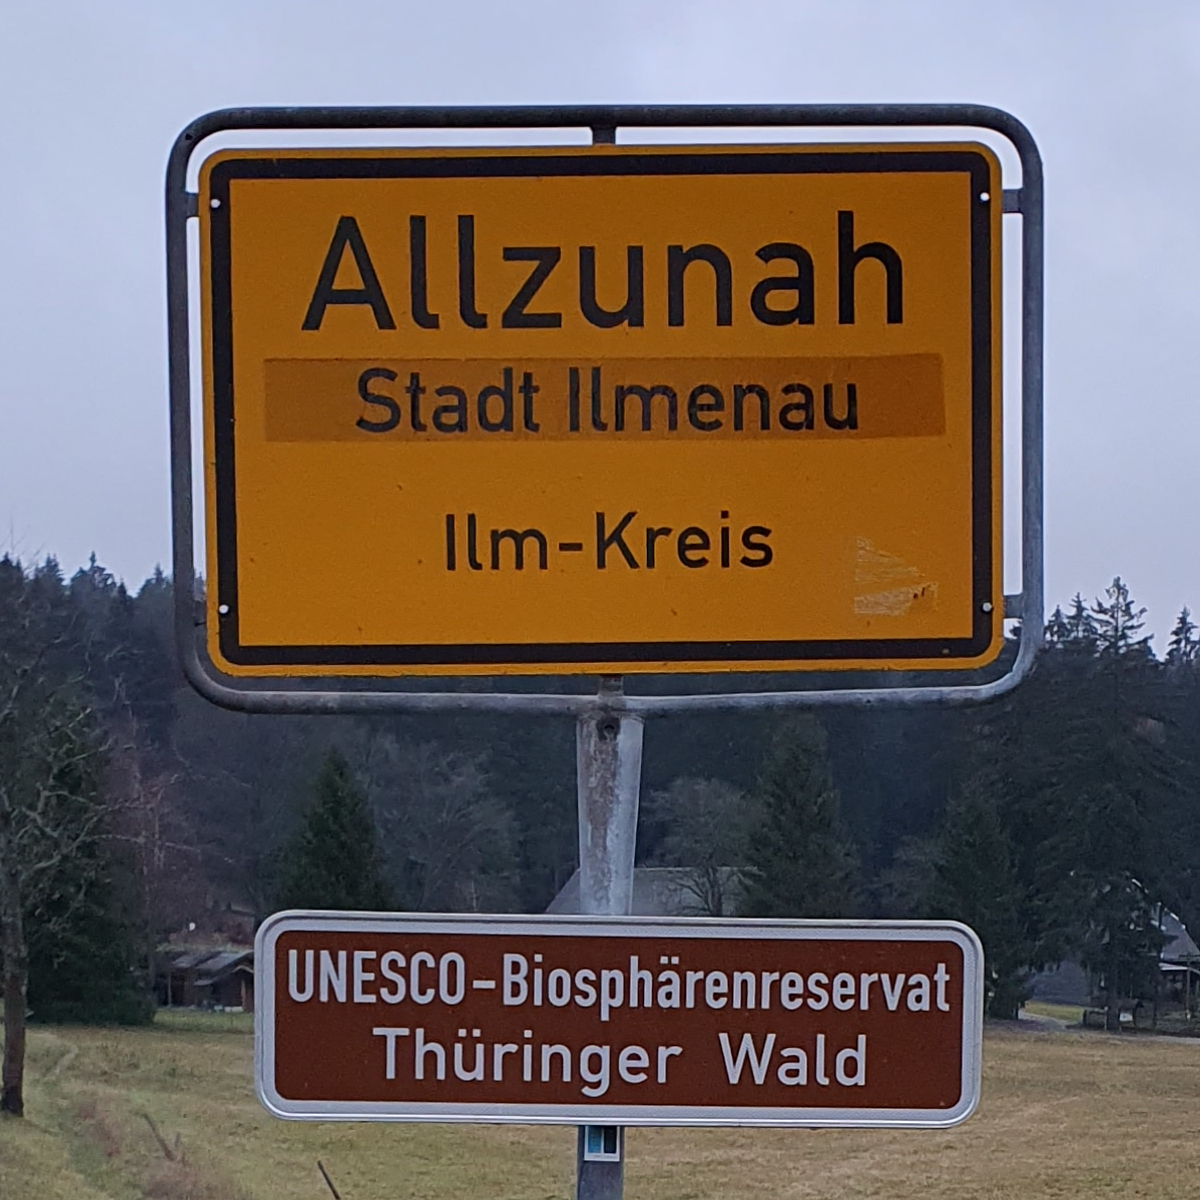 Allzunah im Thüringer Wald